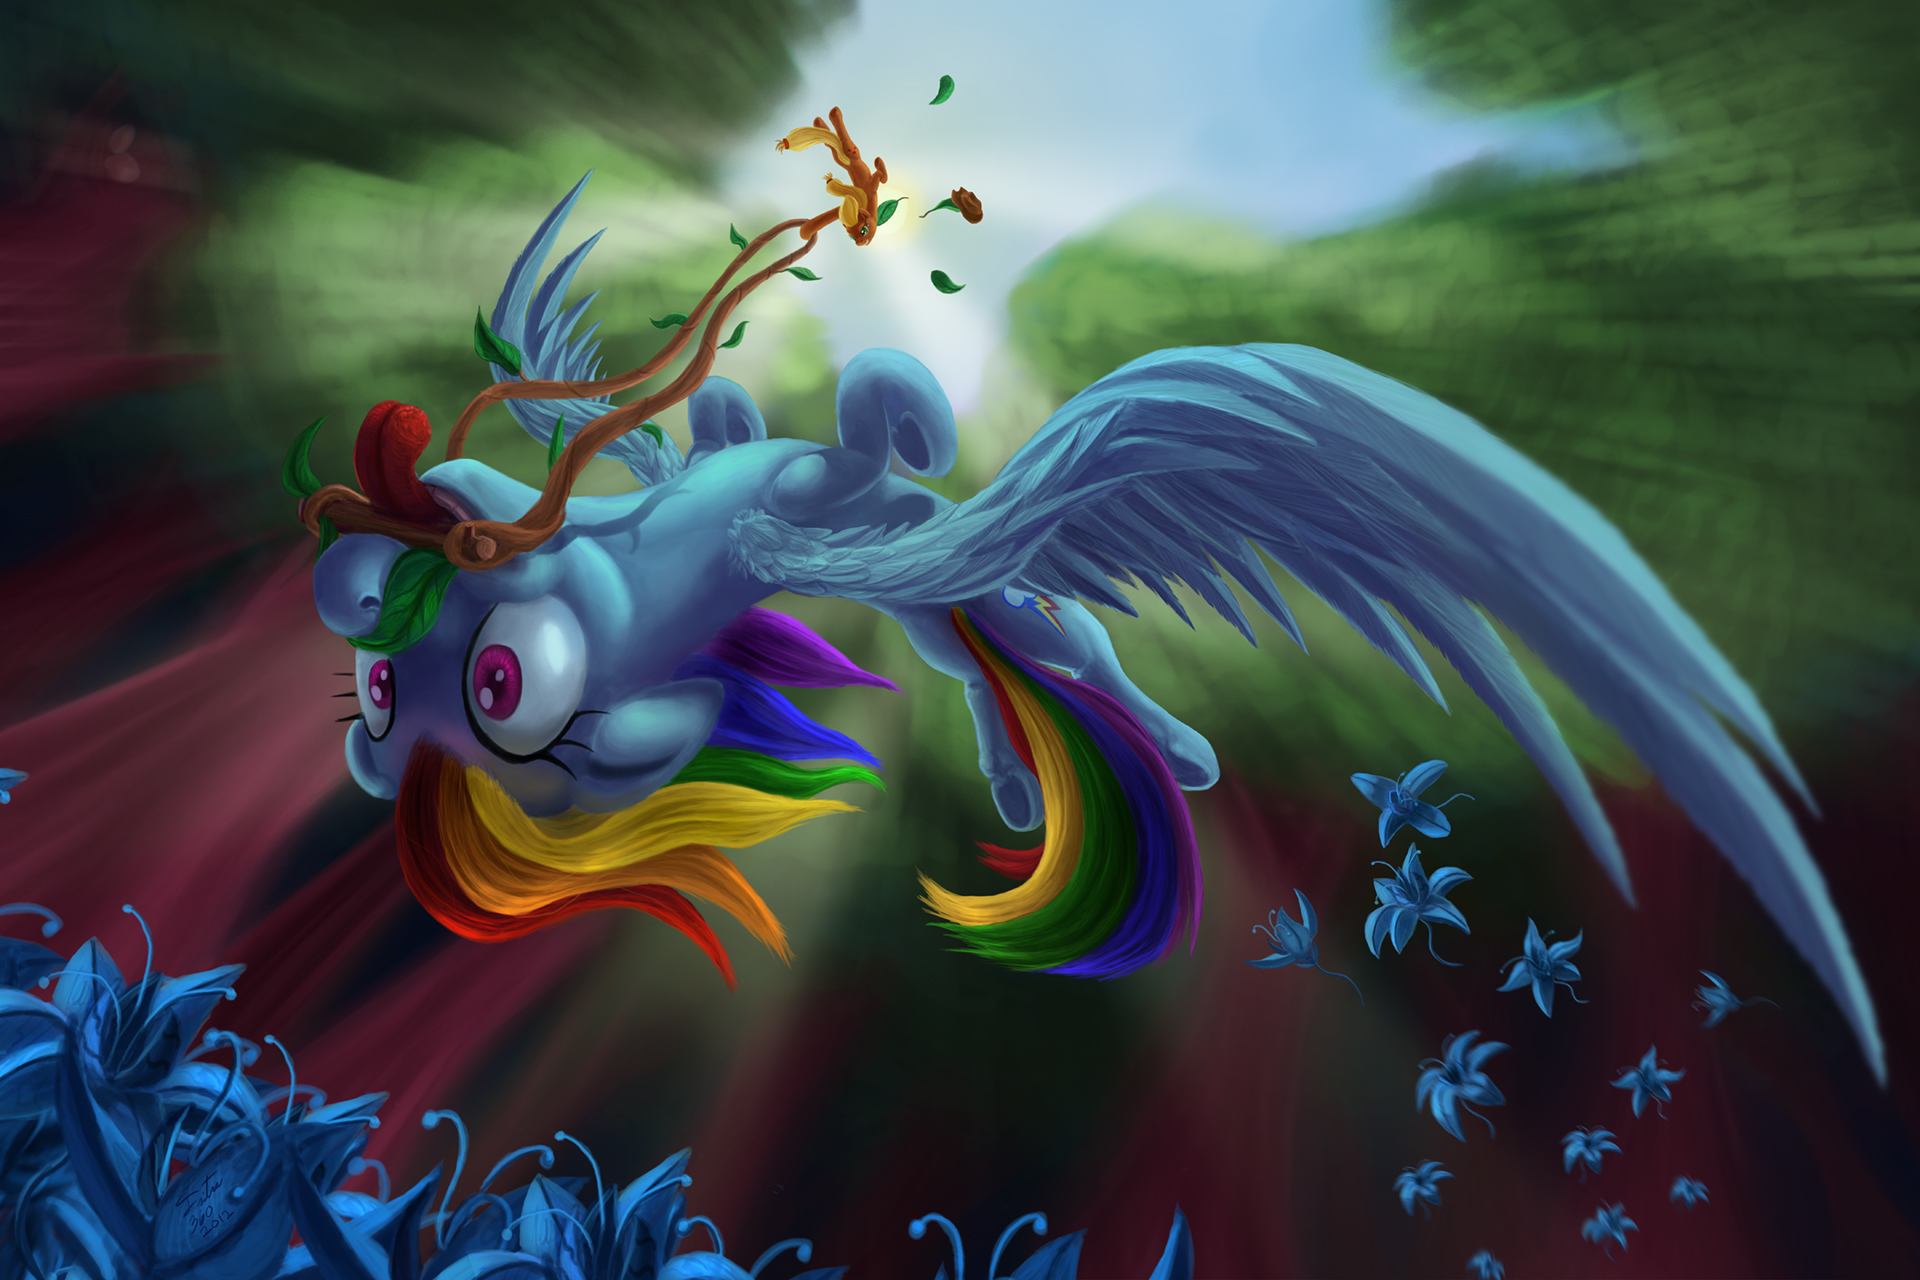 Giddy Up Pony! by Tsitra360